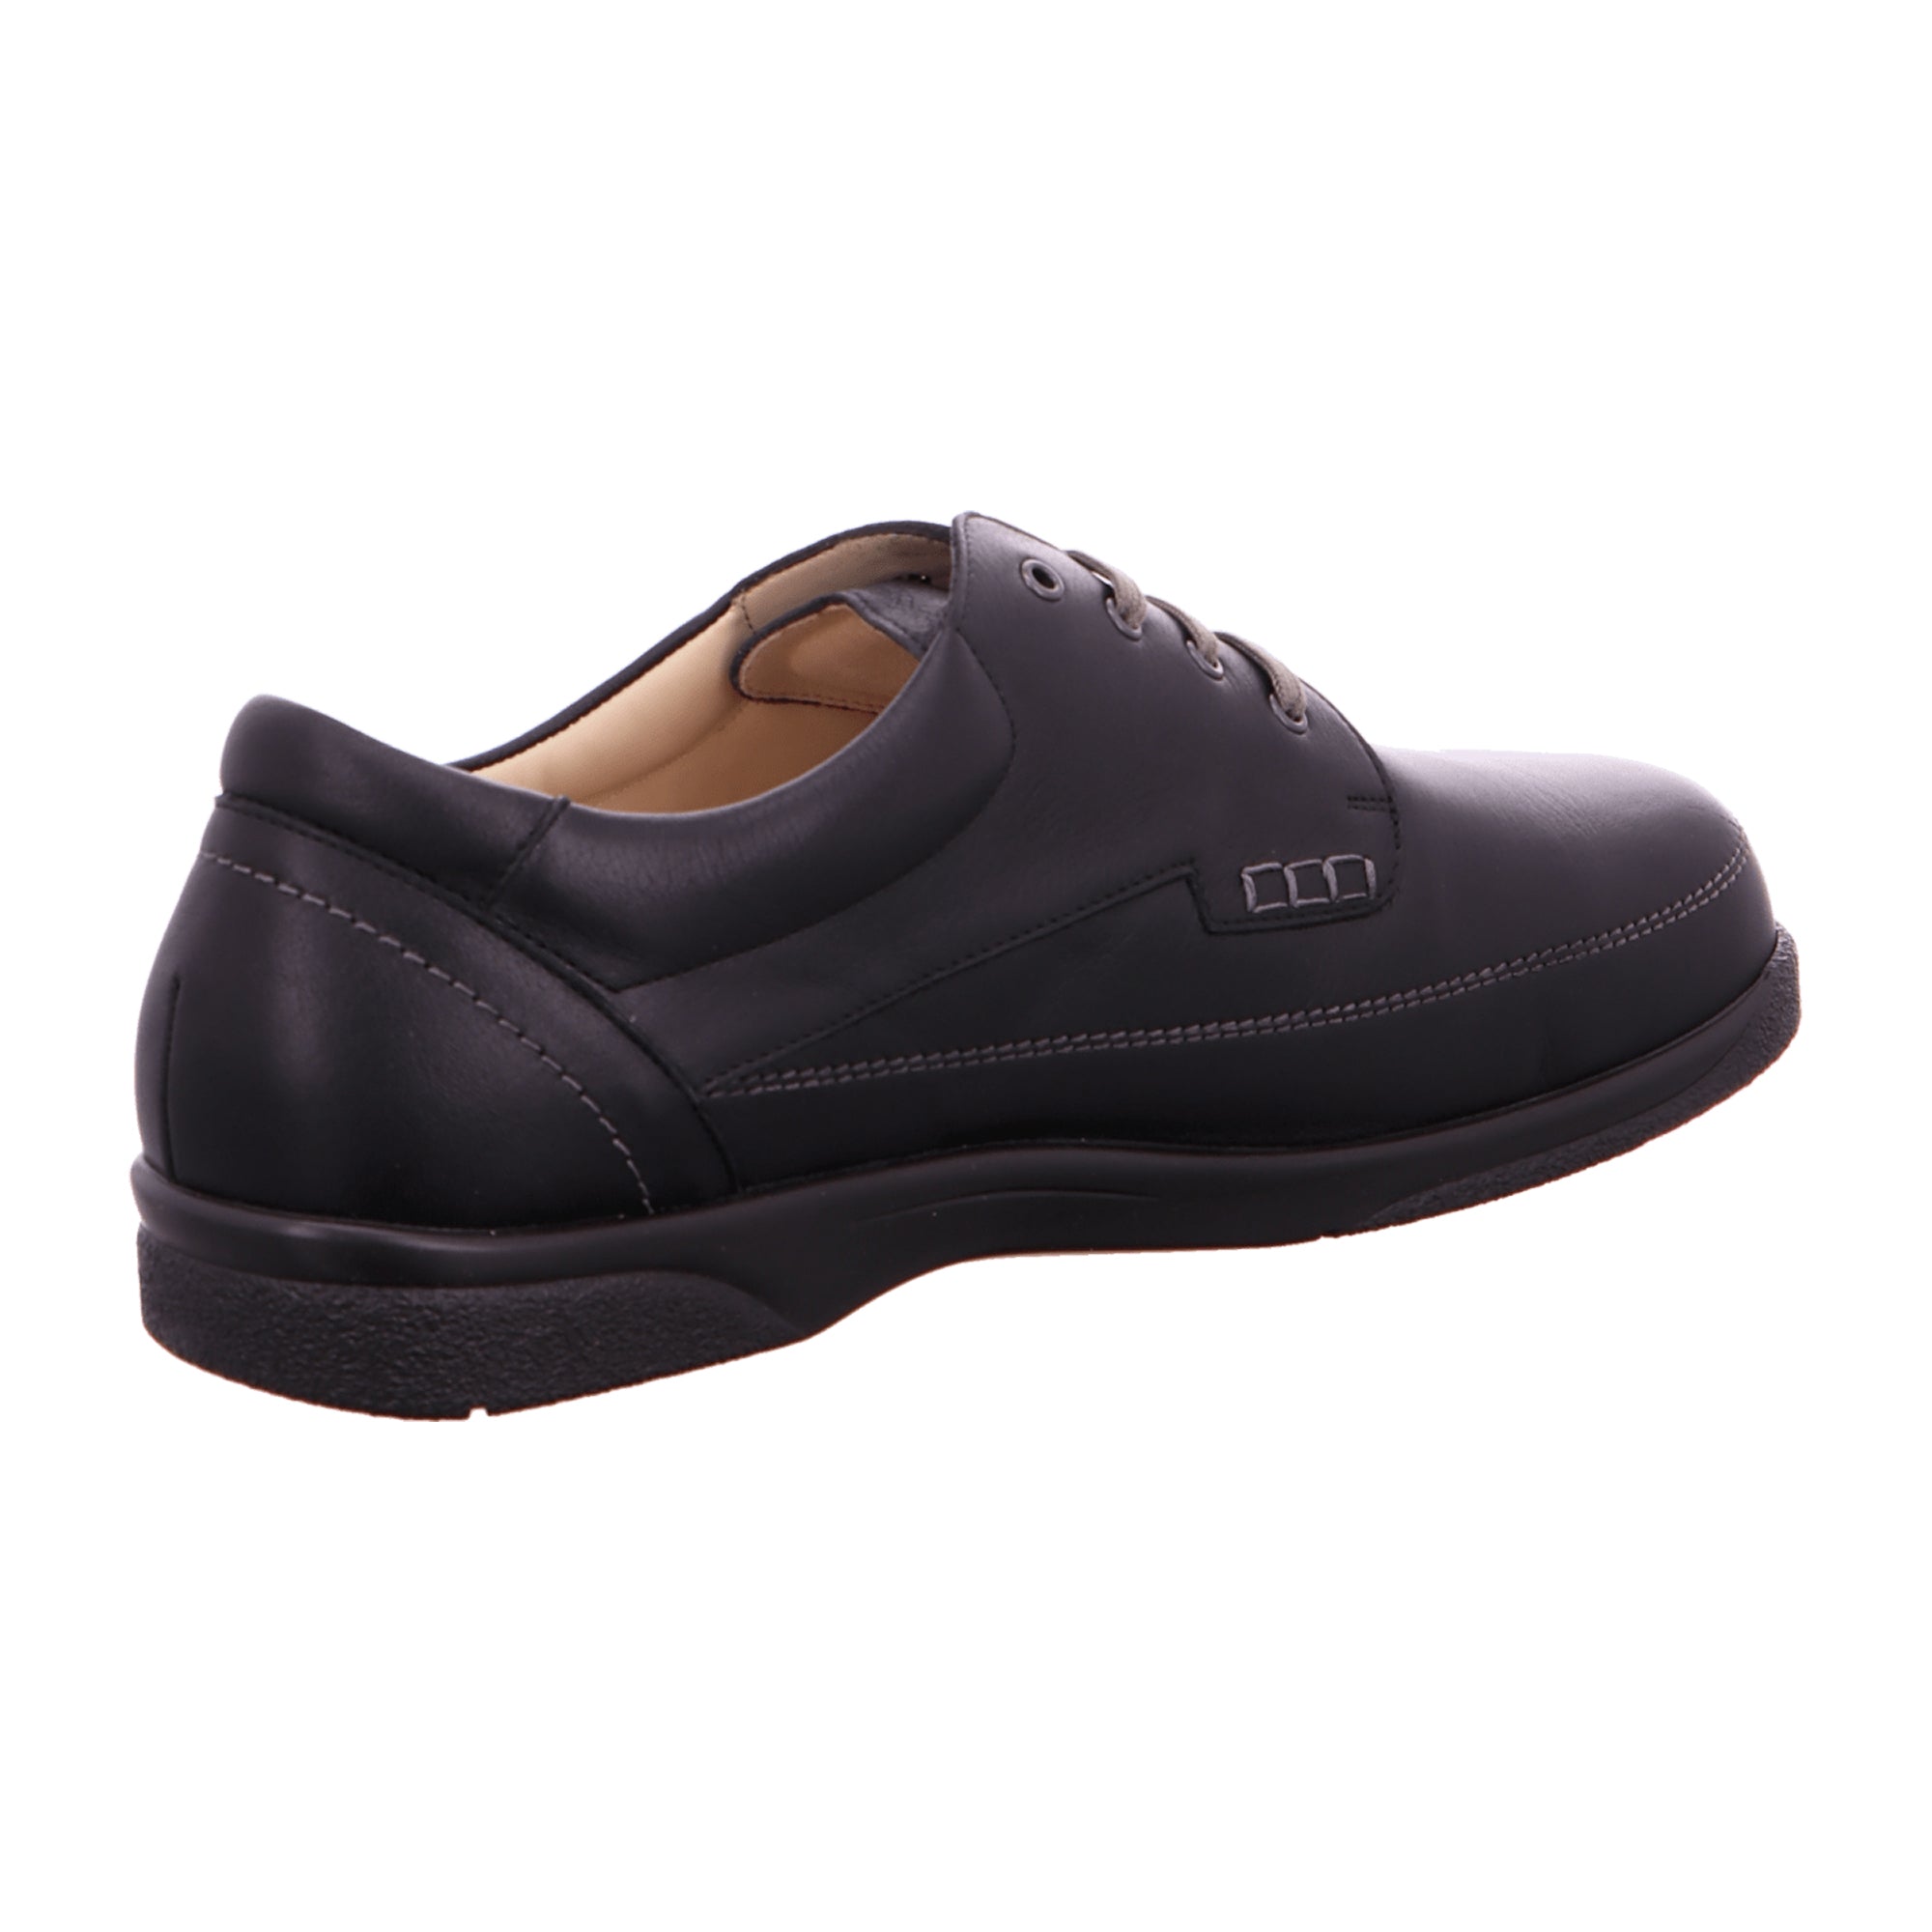 Finn Comfort Men's Comfortable Black Lace-Up Shoes | Stylish & Durable